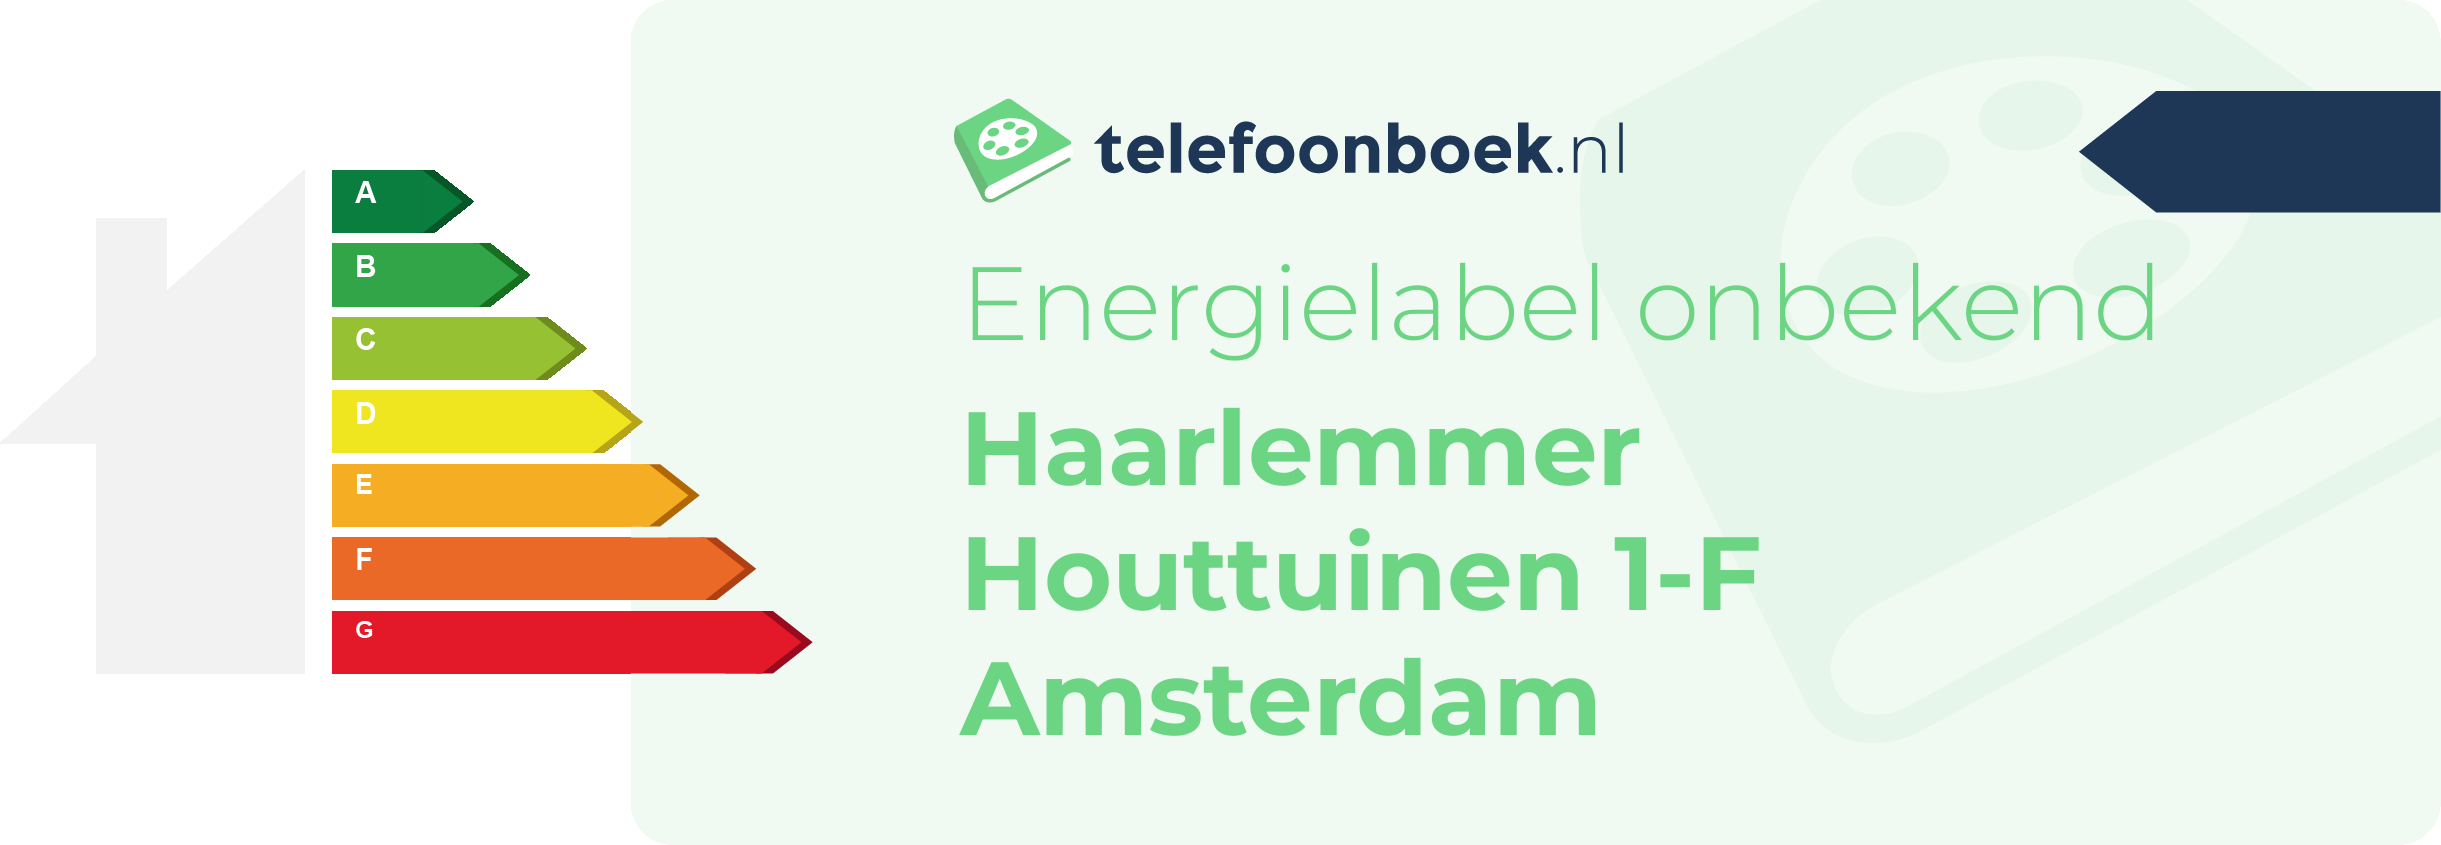 Energielabel Haarlemmer Houttuinen 1-F Amsterdam